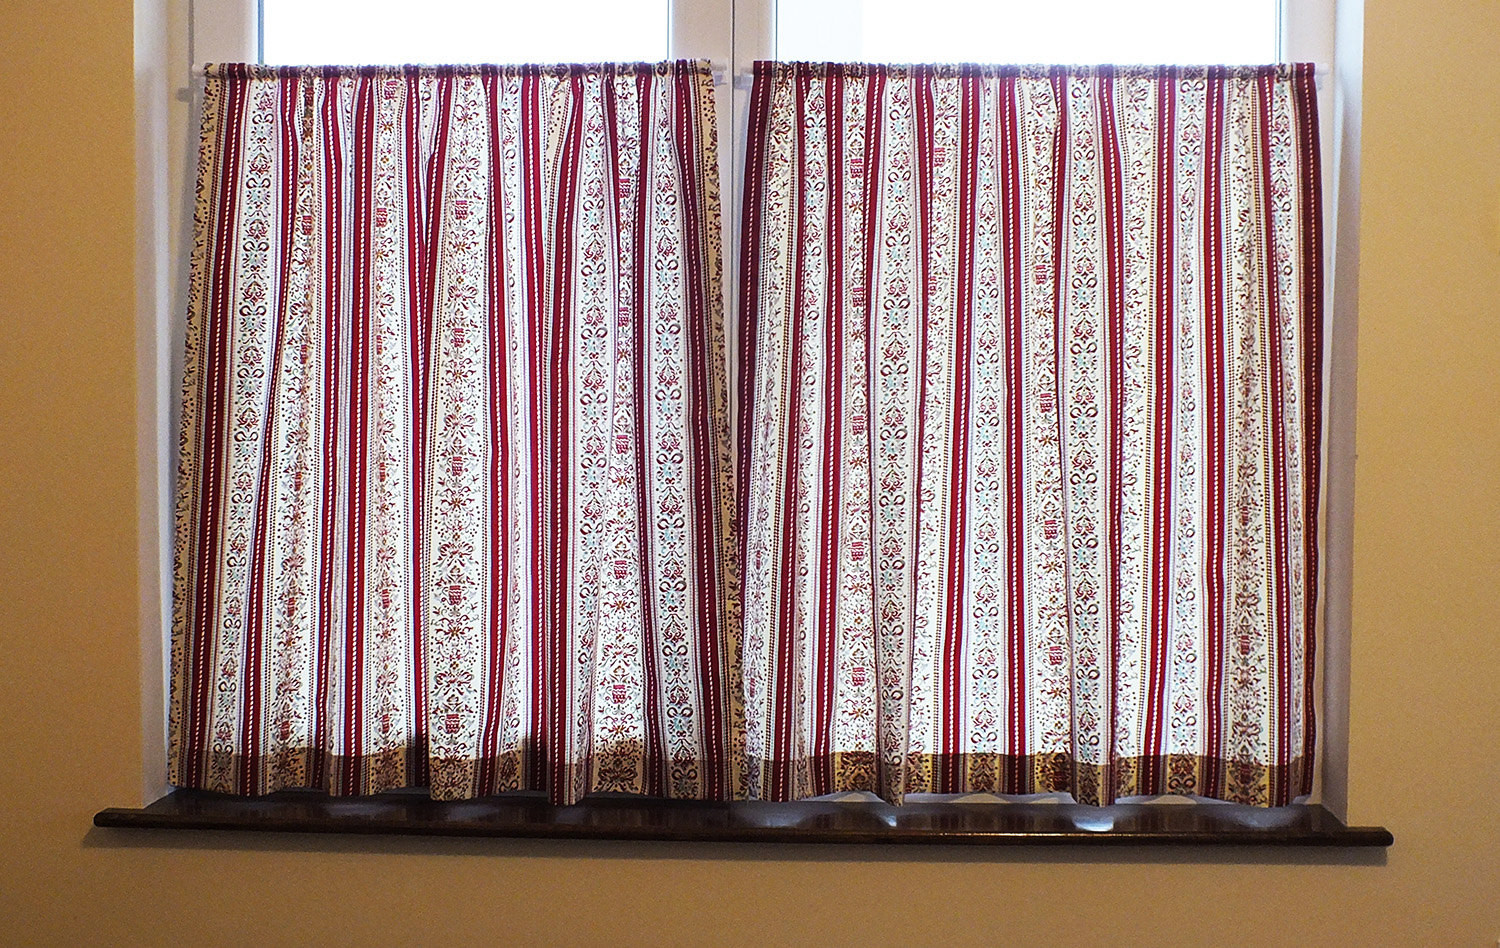 Kitchen Curtains Rods
 Cafe curtains Kitchen curtains Rod pocket curtains Cream